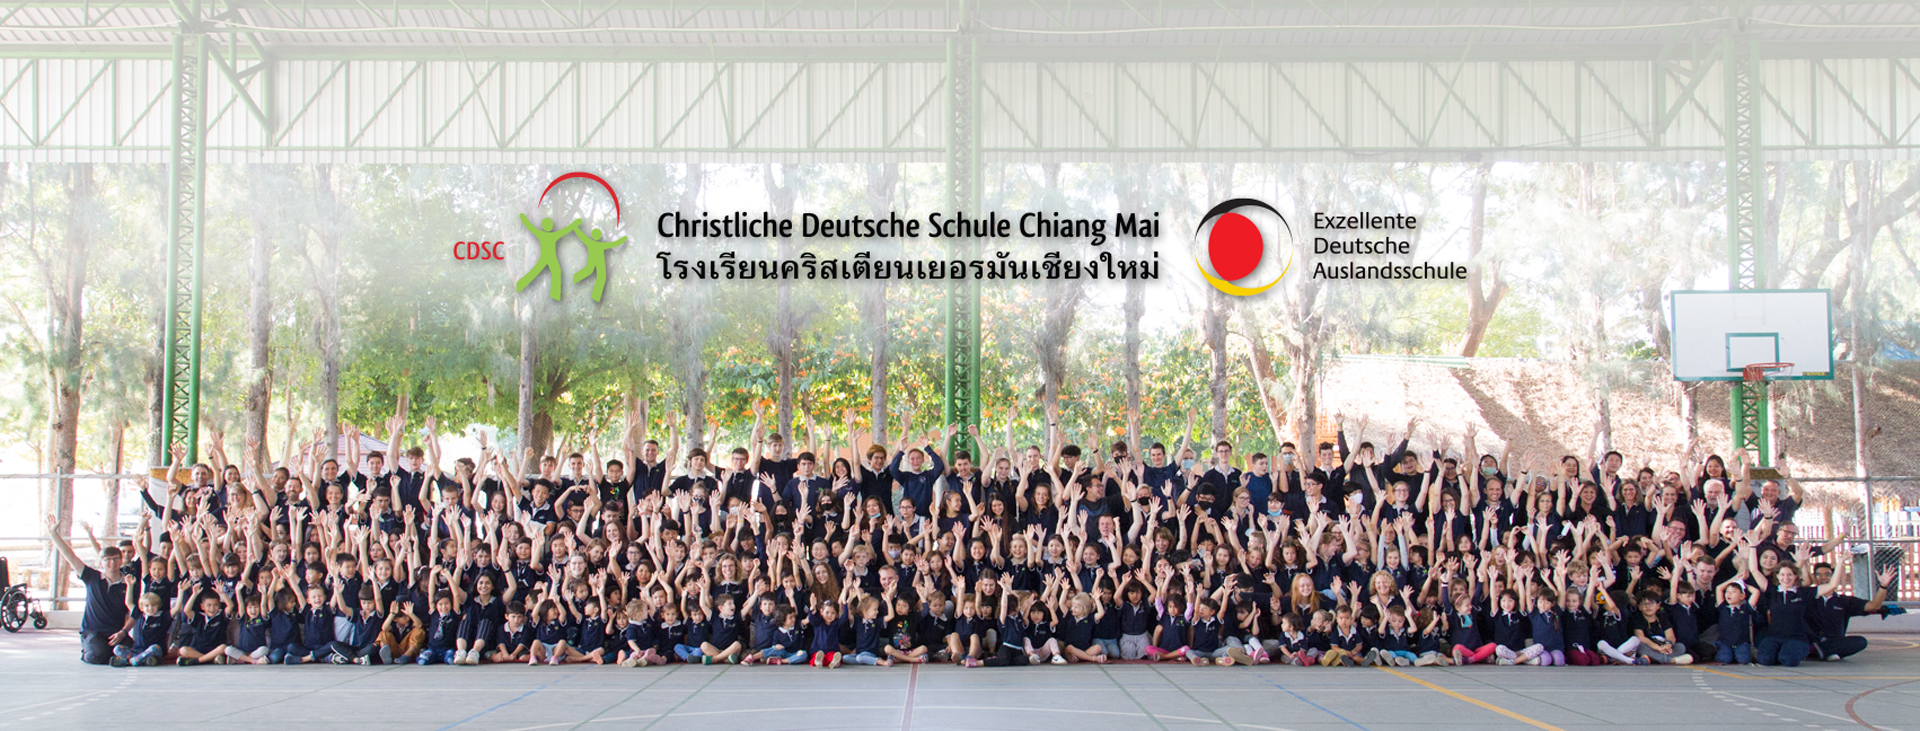 Christliche-Deutsche-Schule-Chiang-Mai-CDSC